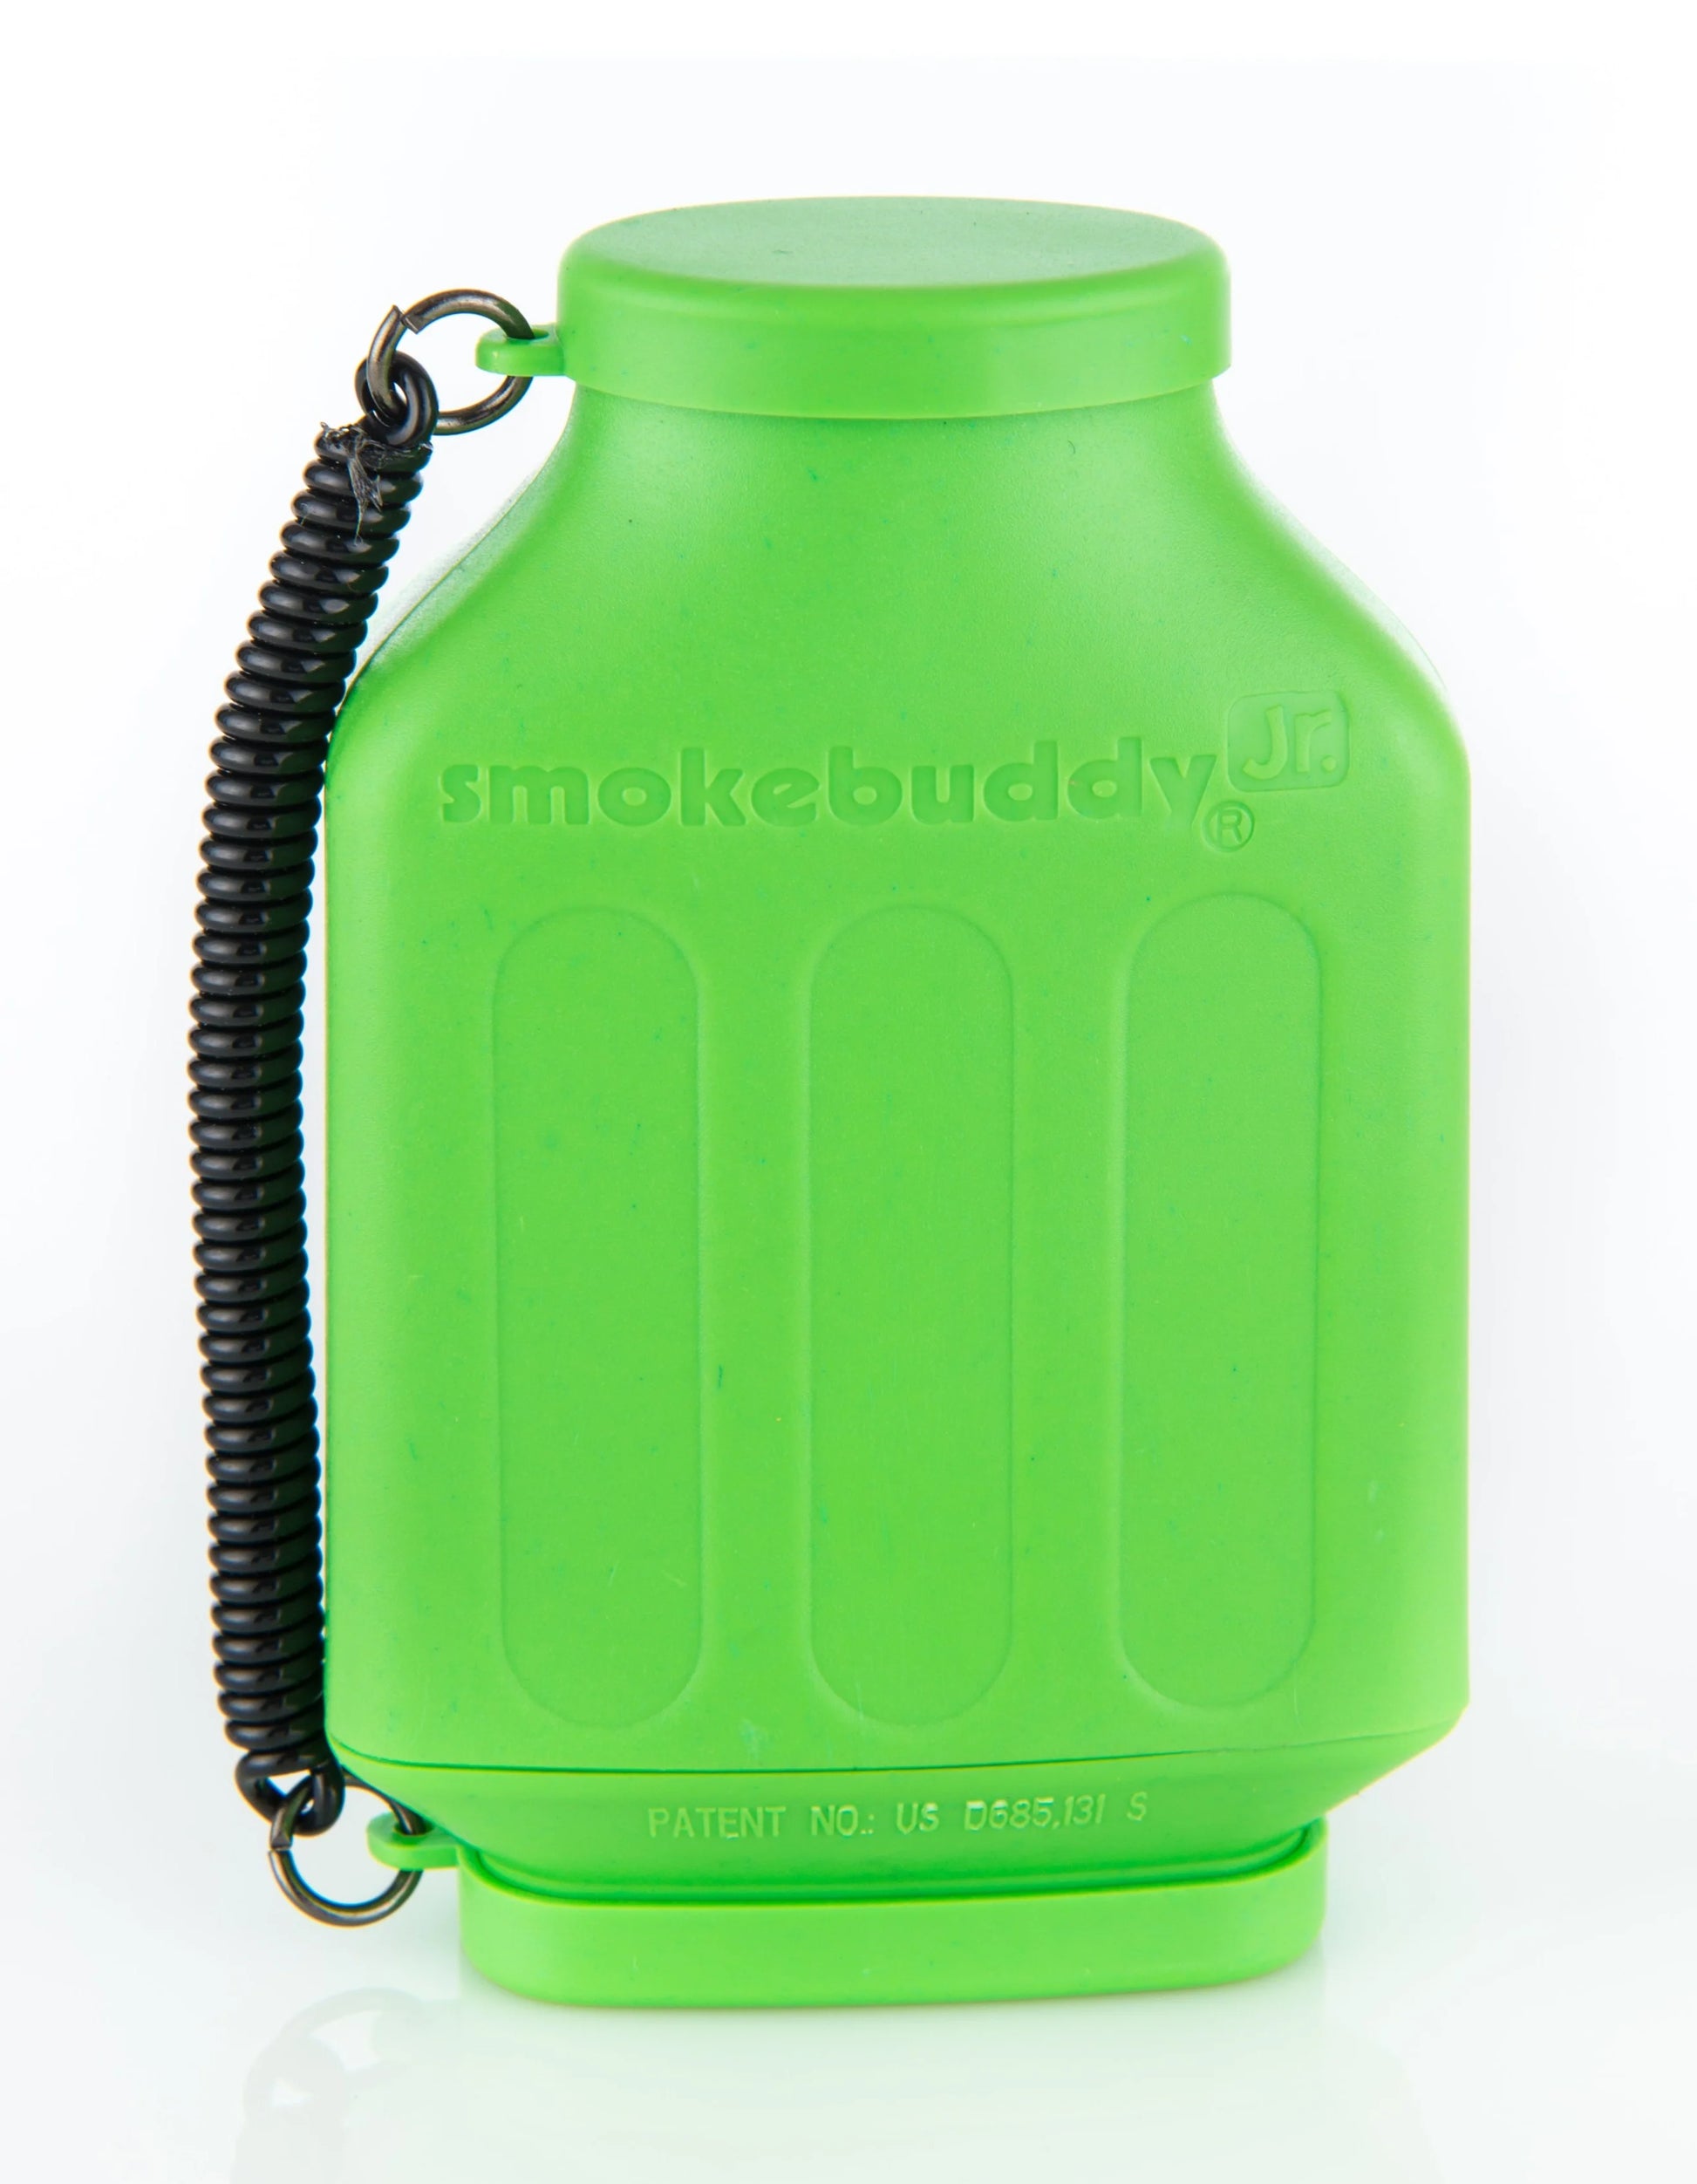 SmokeBuddy Personal Air Filter Jr. | Lime Green